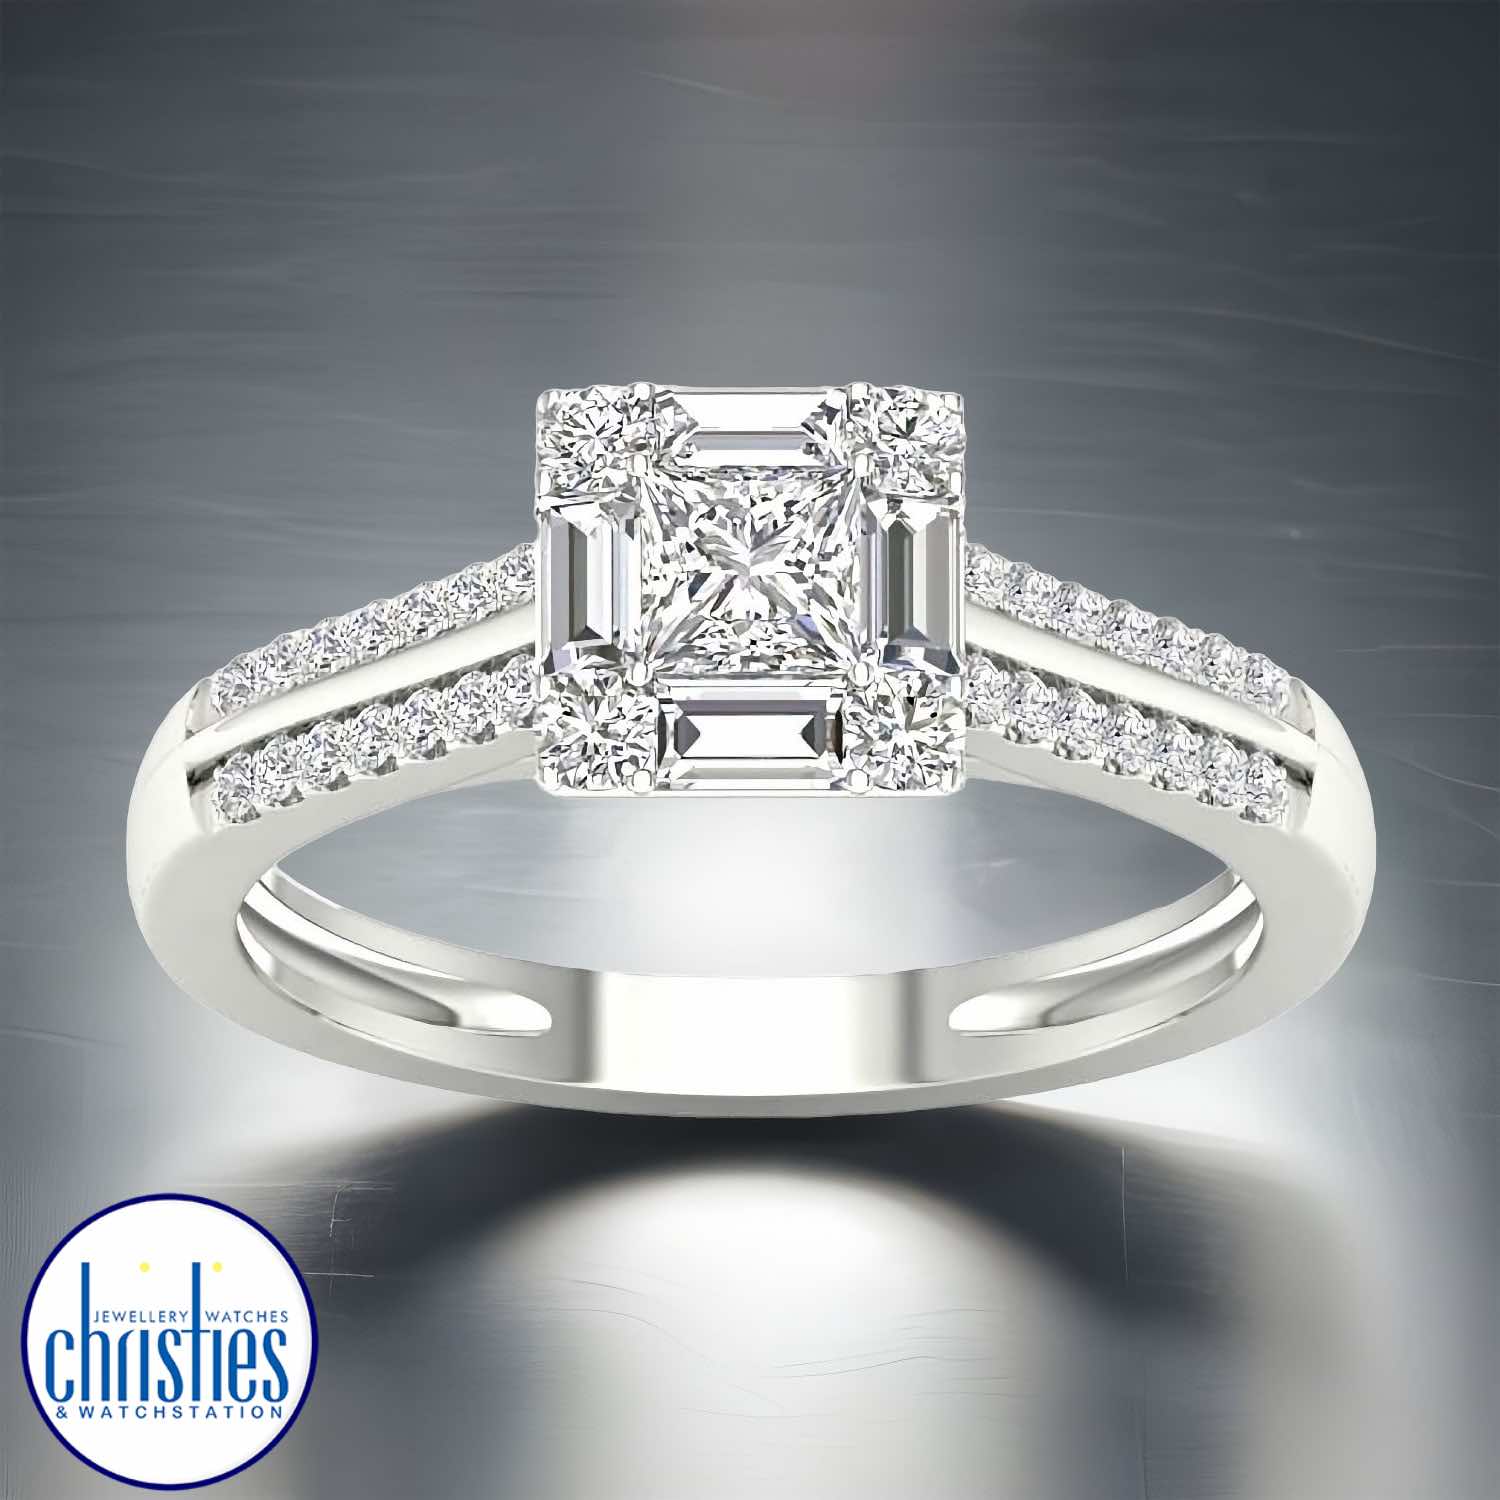 18ct White Gold Diamond Engagement Ring 0.66ct TDW RB15710EG. 18ct White Gold Diamond Engagement Ring 0.